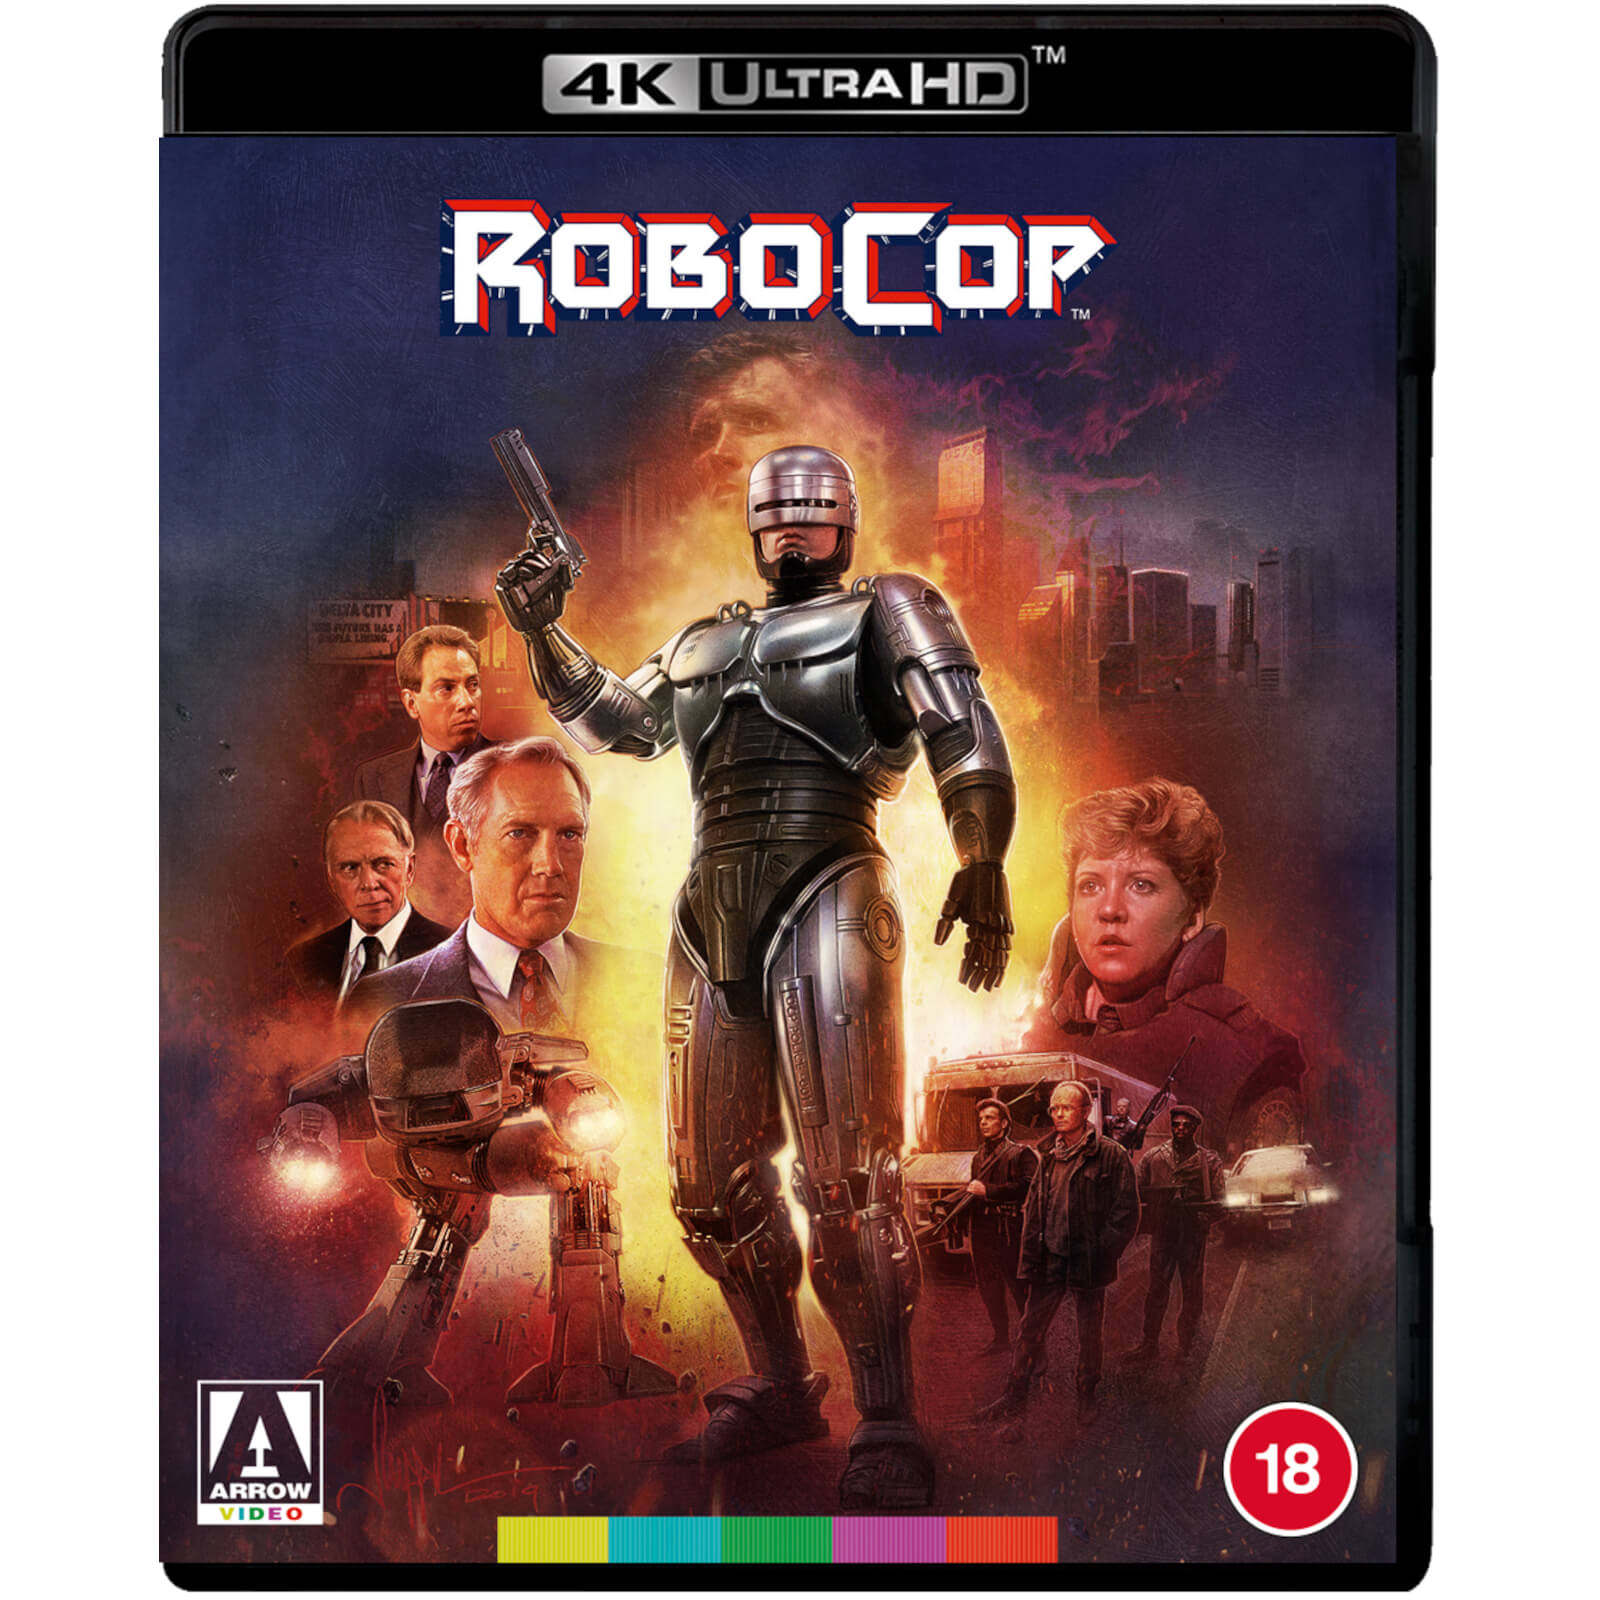 Arrow - Robocop 4k ultra hd (standard edition)